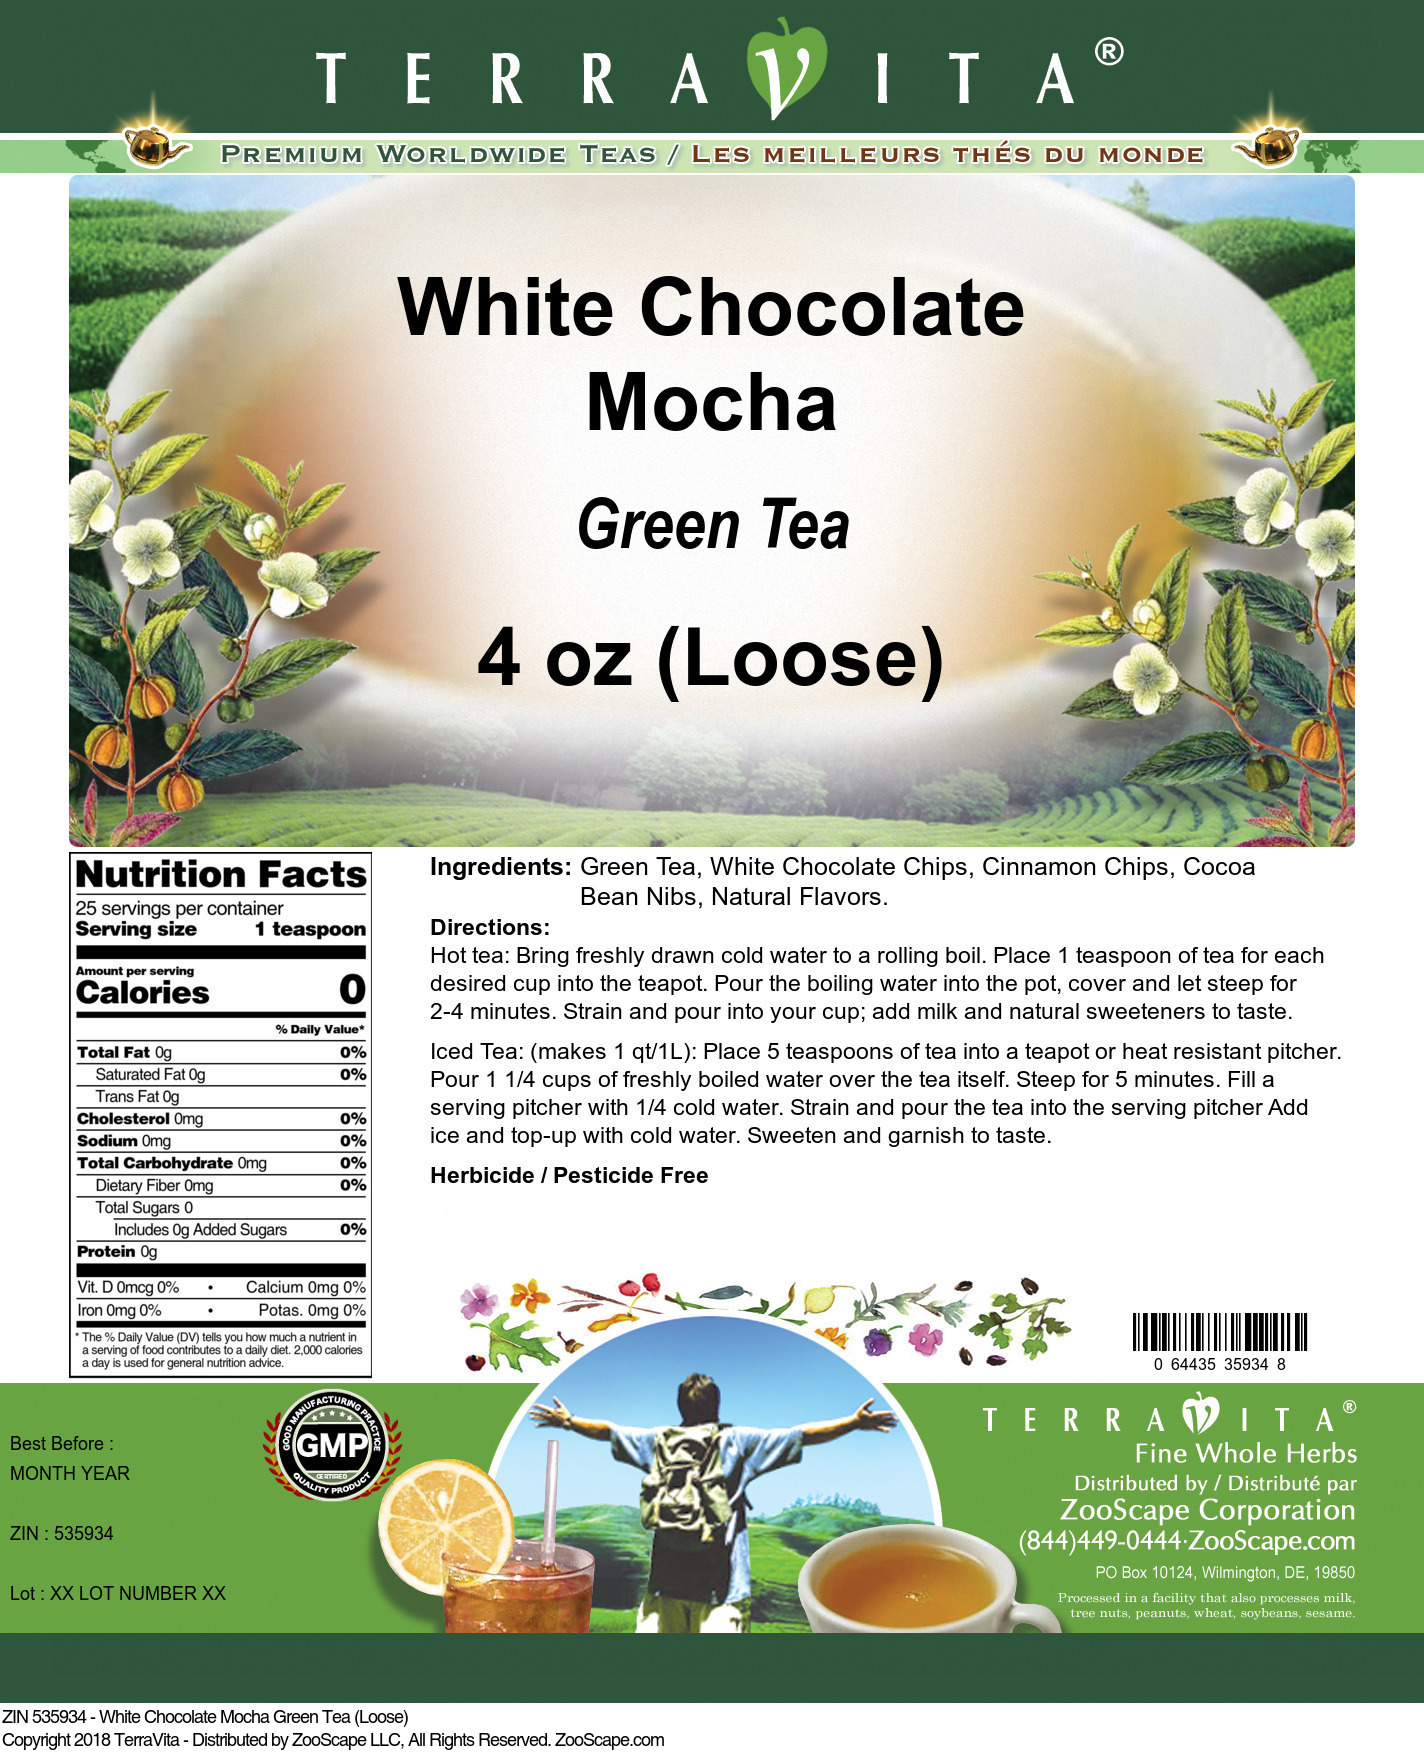 White Chocolate Mocha Green Tea (Loose) - Label